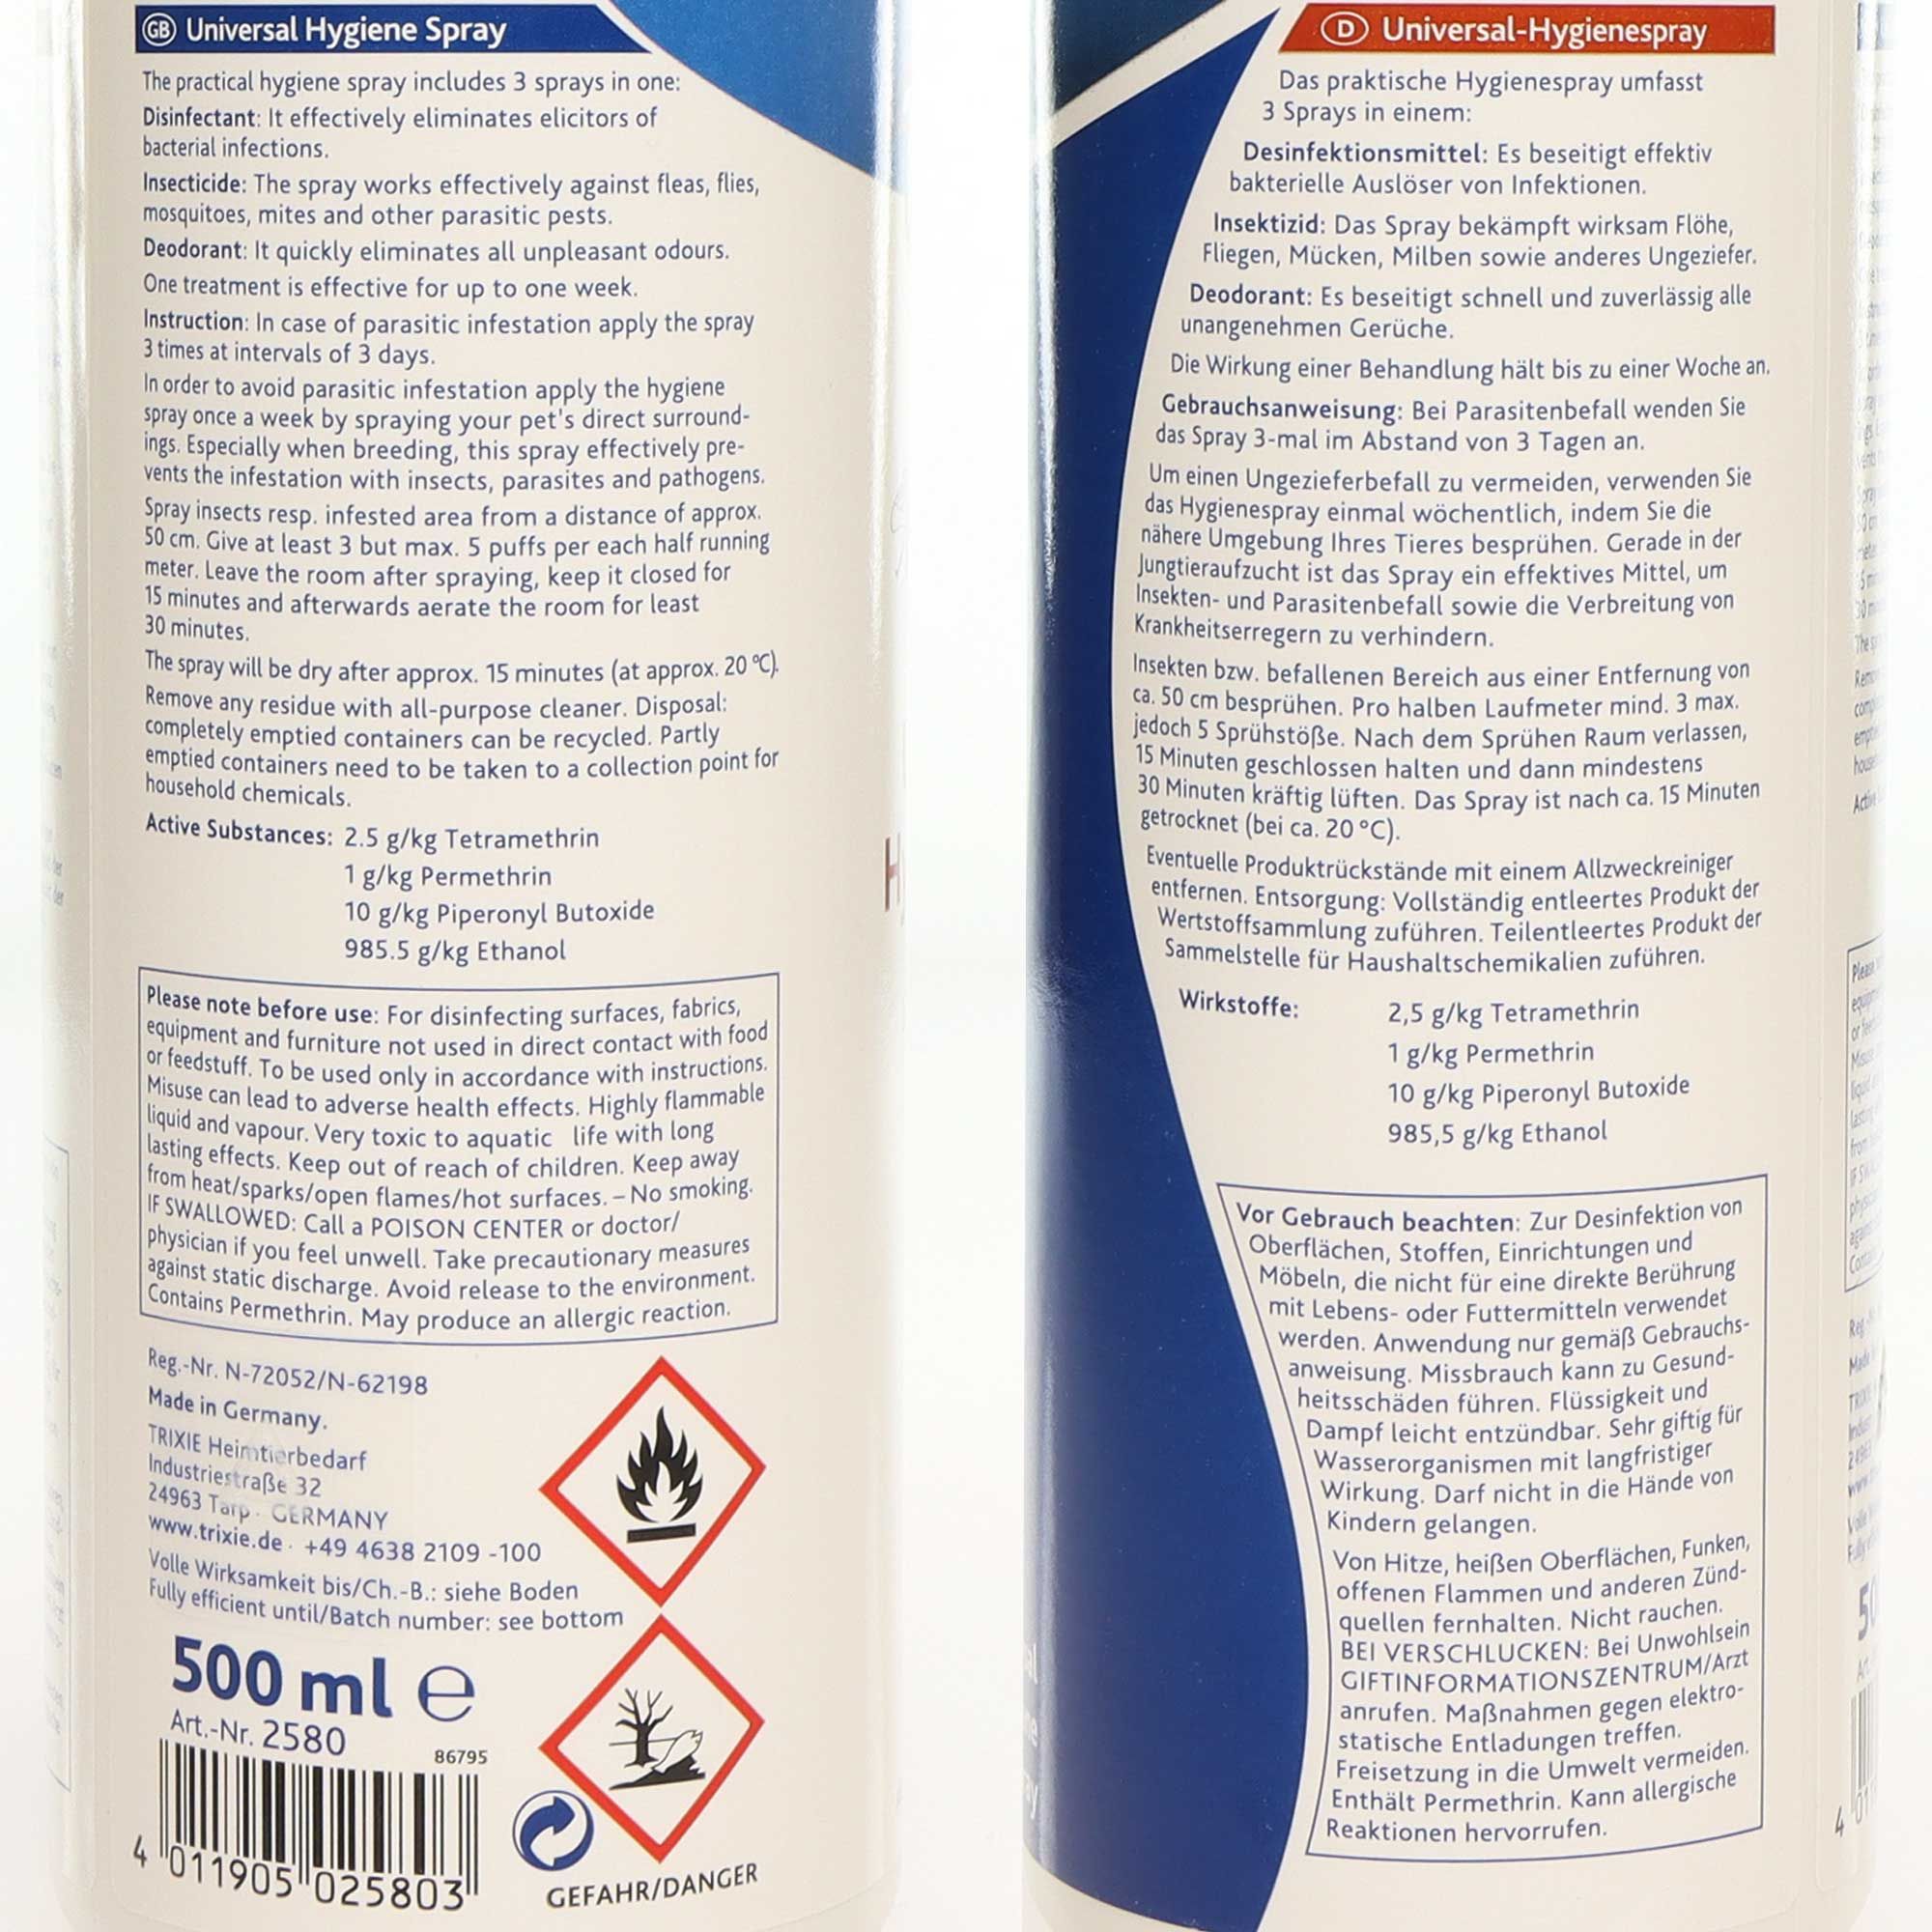 Universal Hygienespray 3-in-1 - Desinfektionsmittel - Insektizid - Deodorant